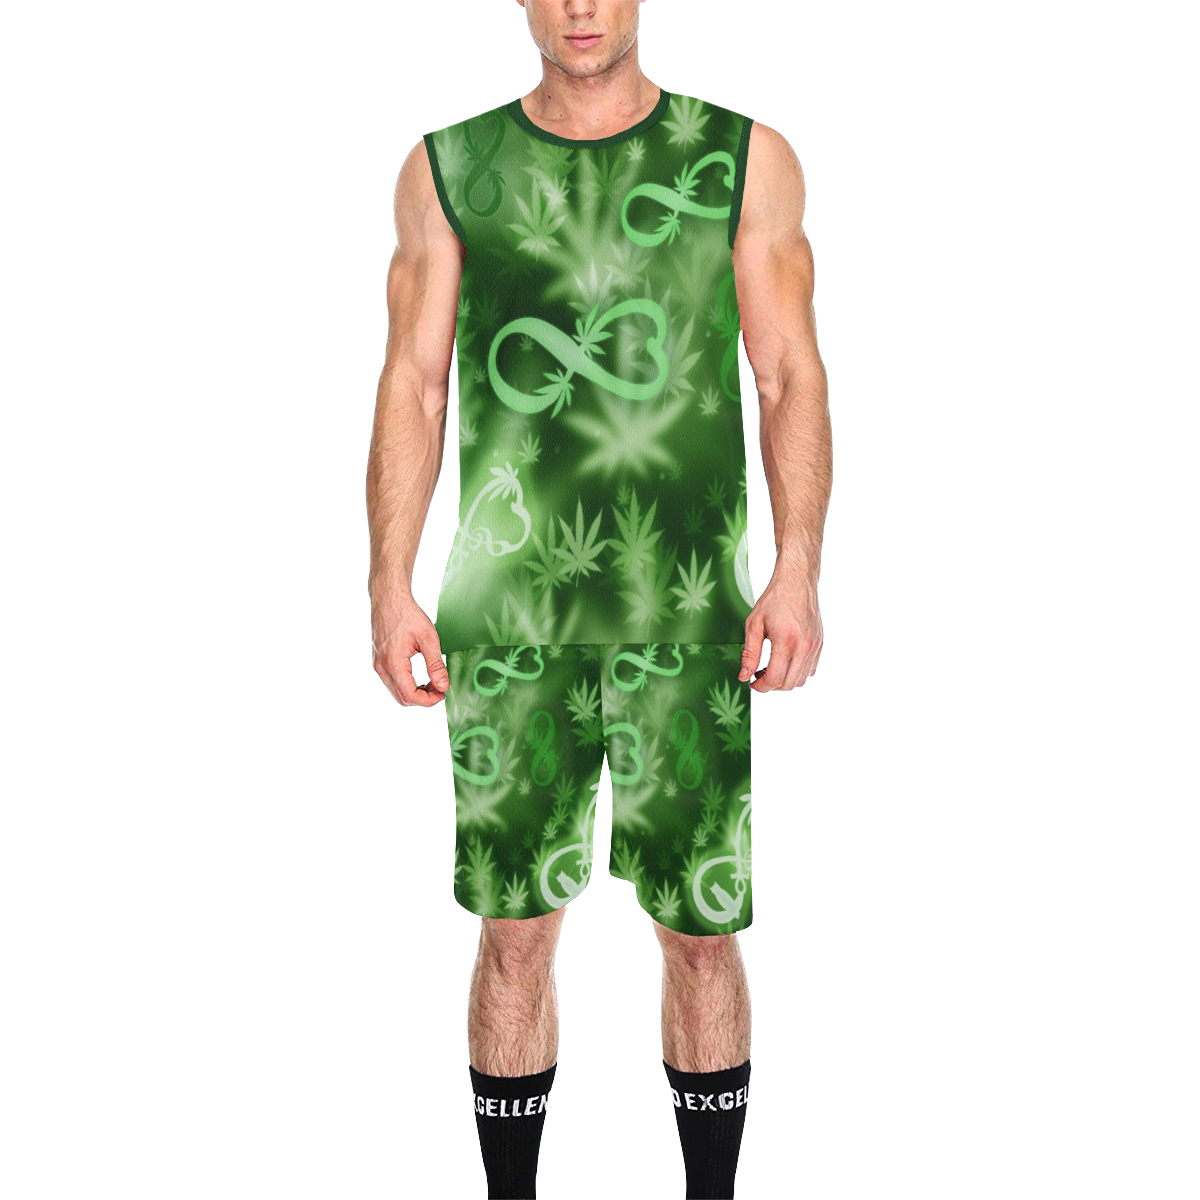 INFINITY GREEN COSMOS All Over Print Basketball Uniform